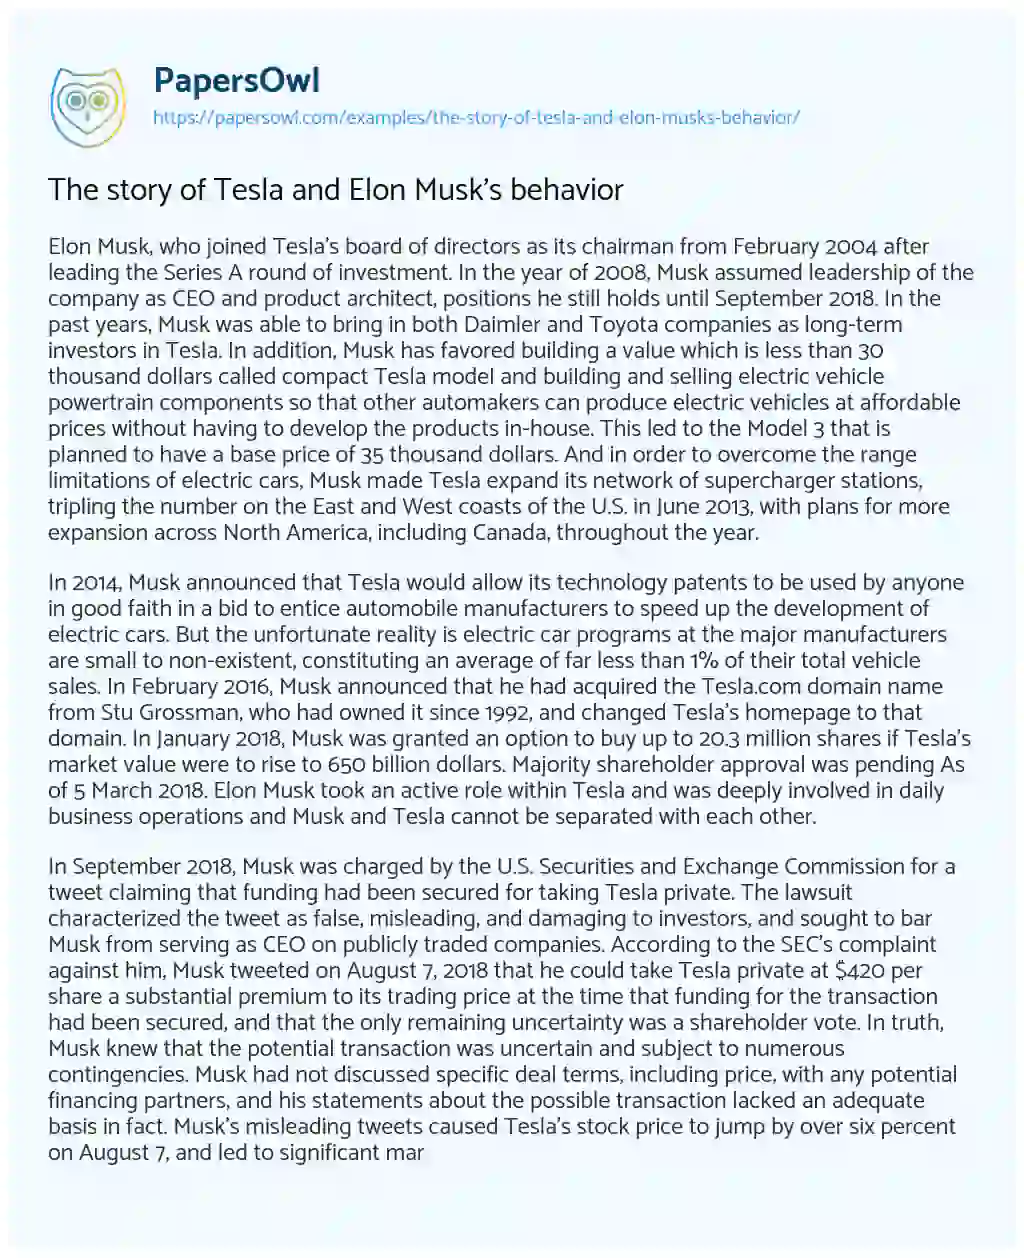 The Story of Tesla and Elon Musk’s Behavior essay